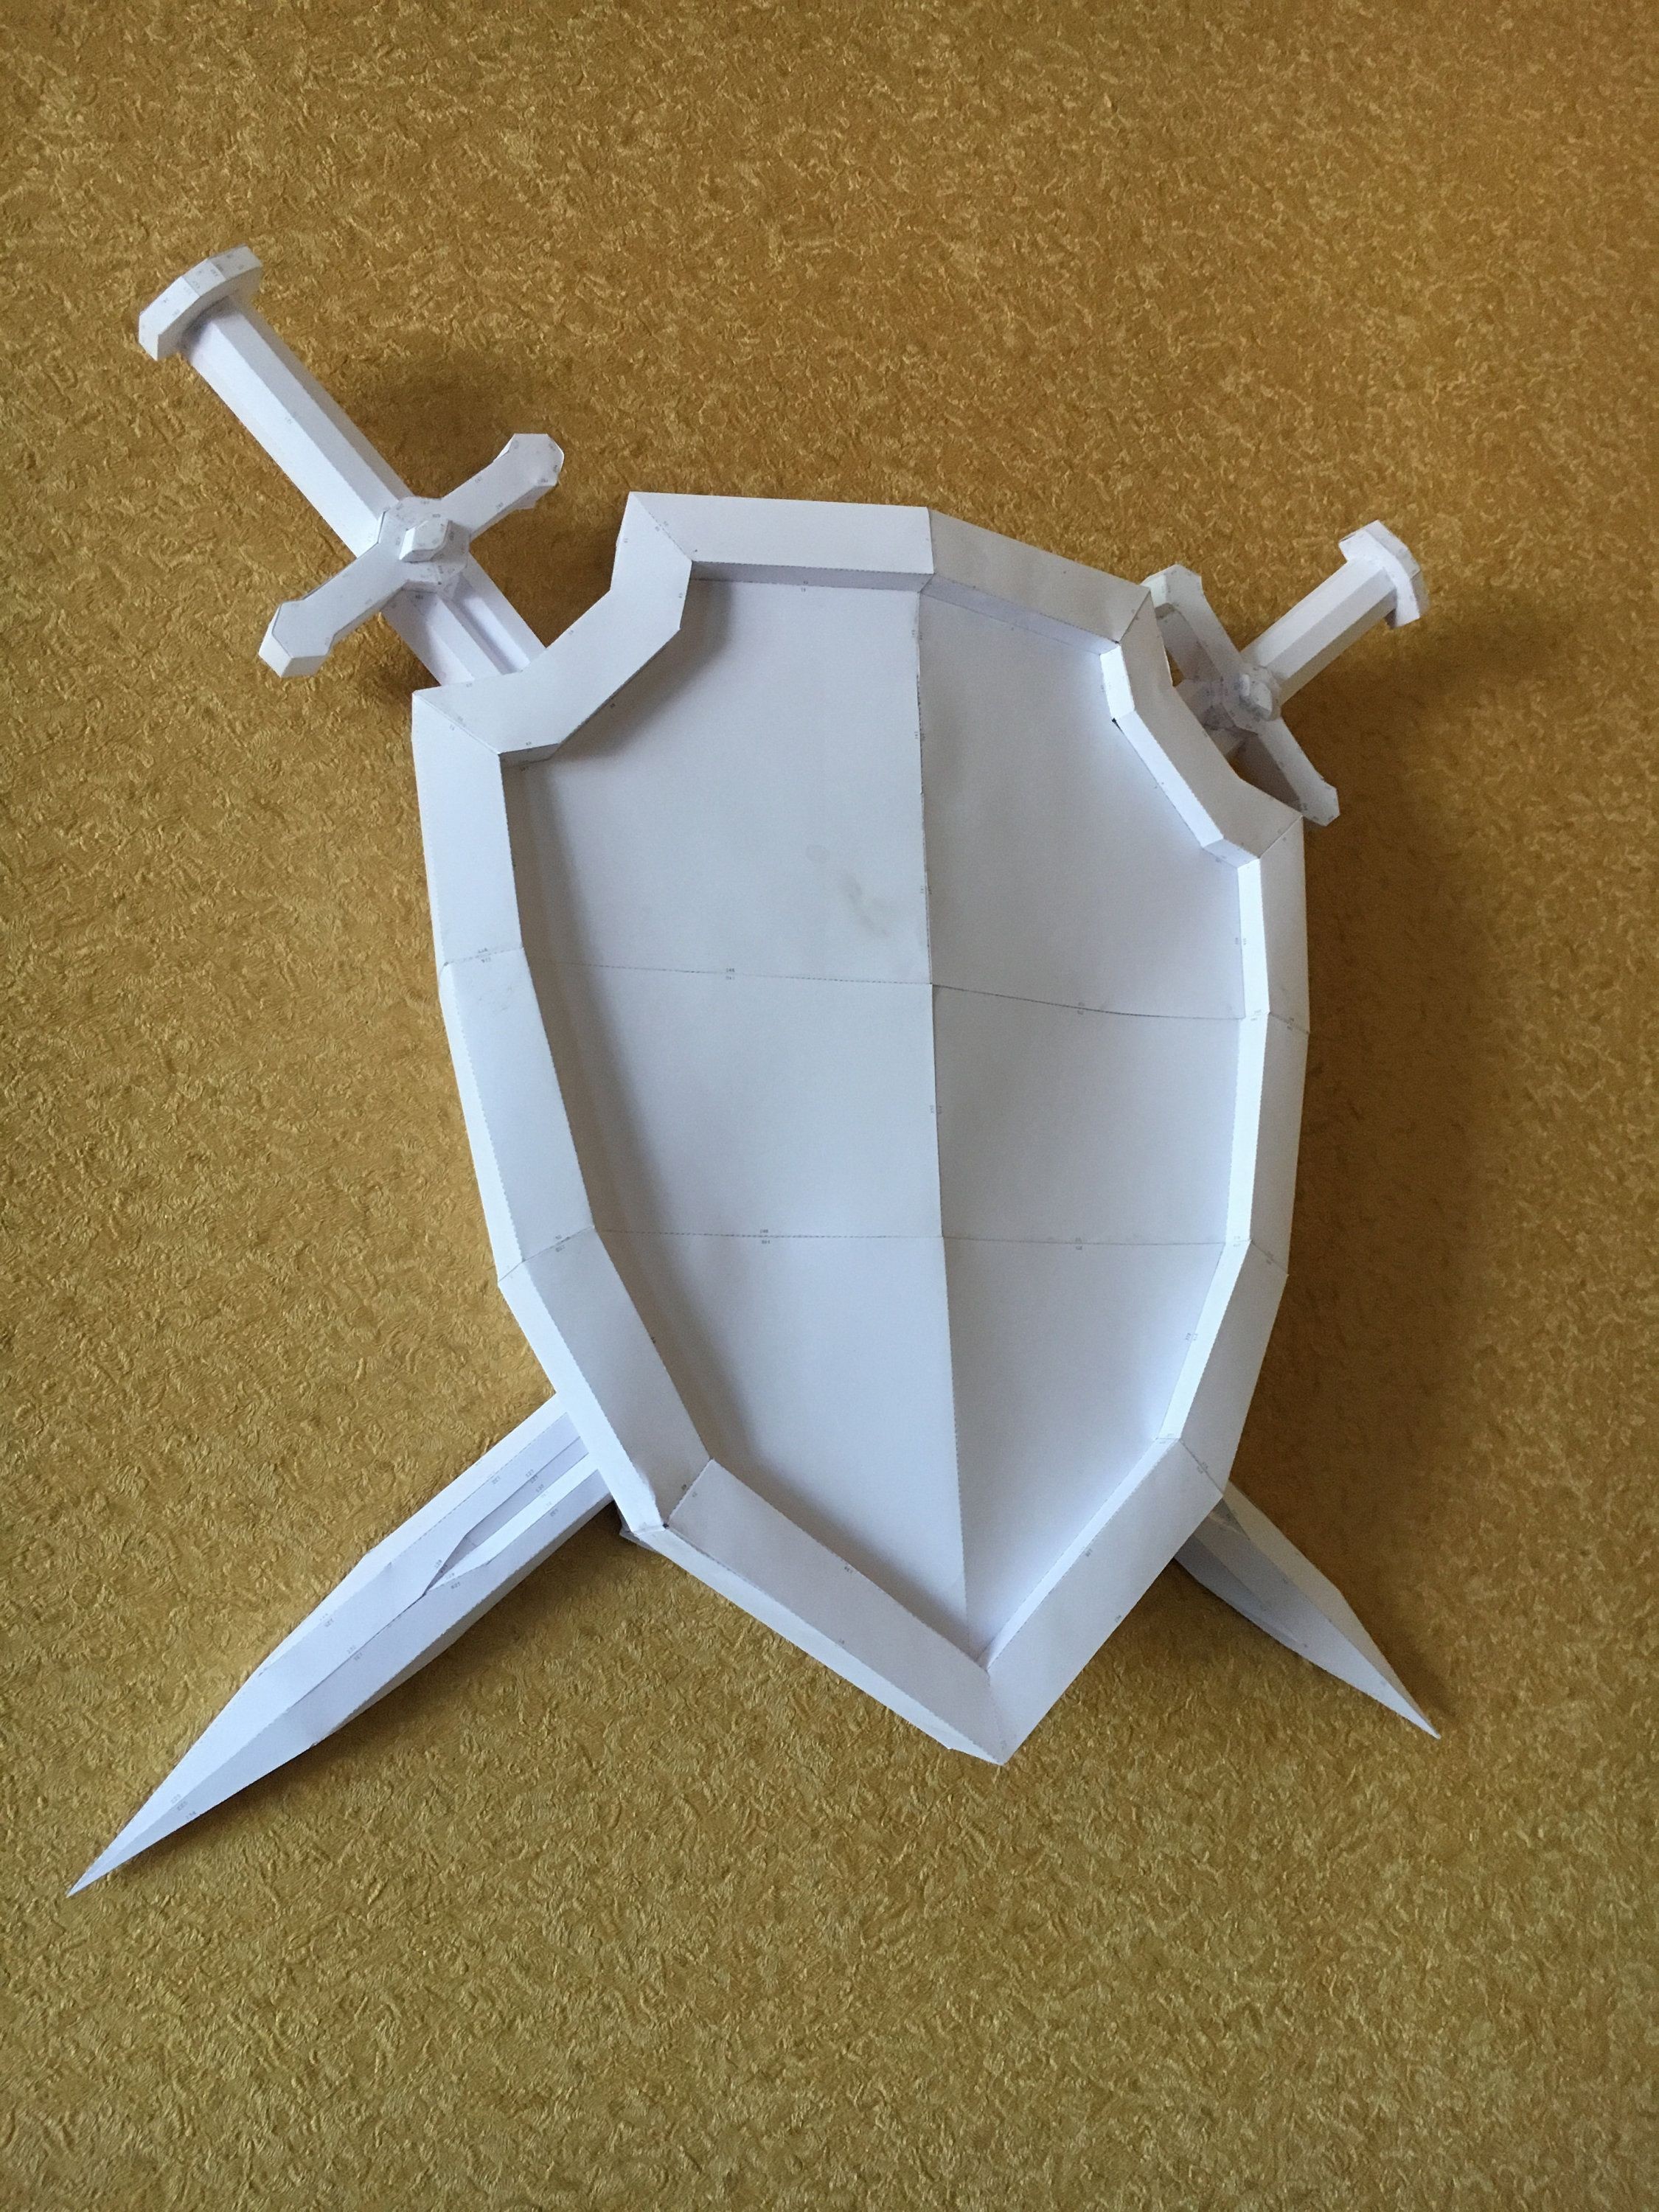 Papercraft Tiger Sword Shield Diy Papercraft Model ÐÑÐ¼Ð°Ð¶Ð½ÑÐµ Ð¸Ð·Ð´ÐµÐ Ð¸Ñ